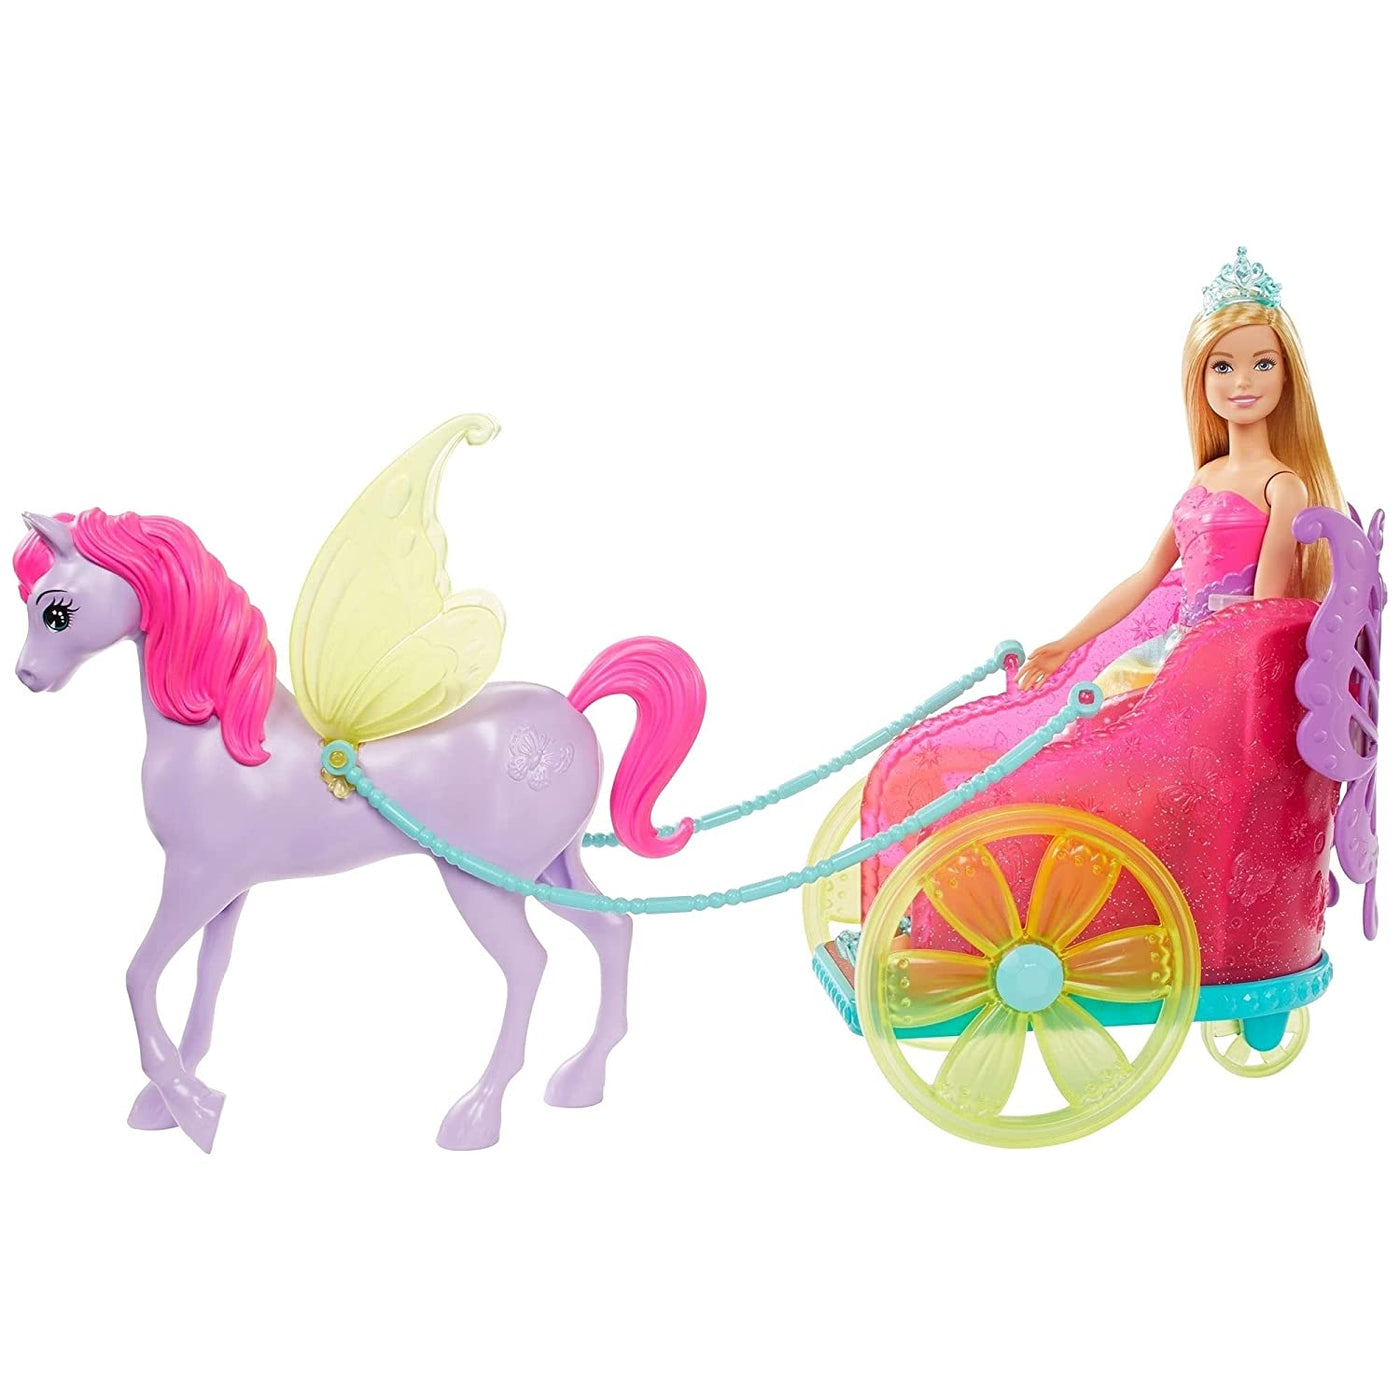 Fantancy Vehicle, Dreamtopia | Barbie